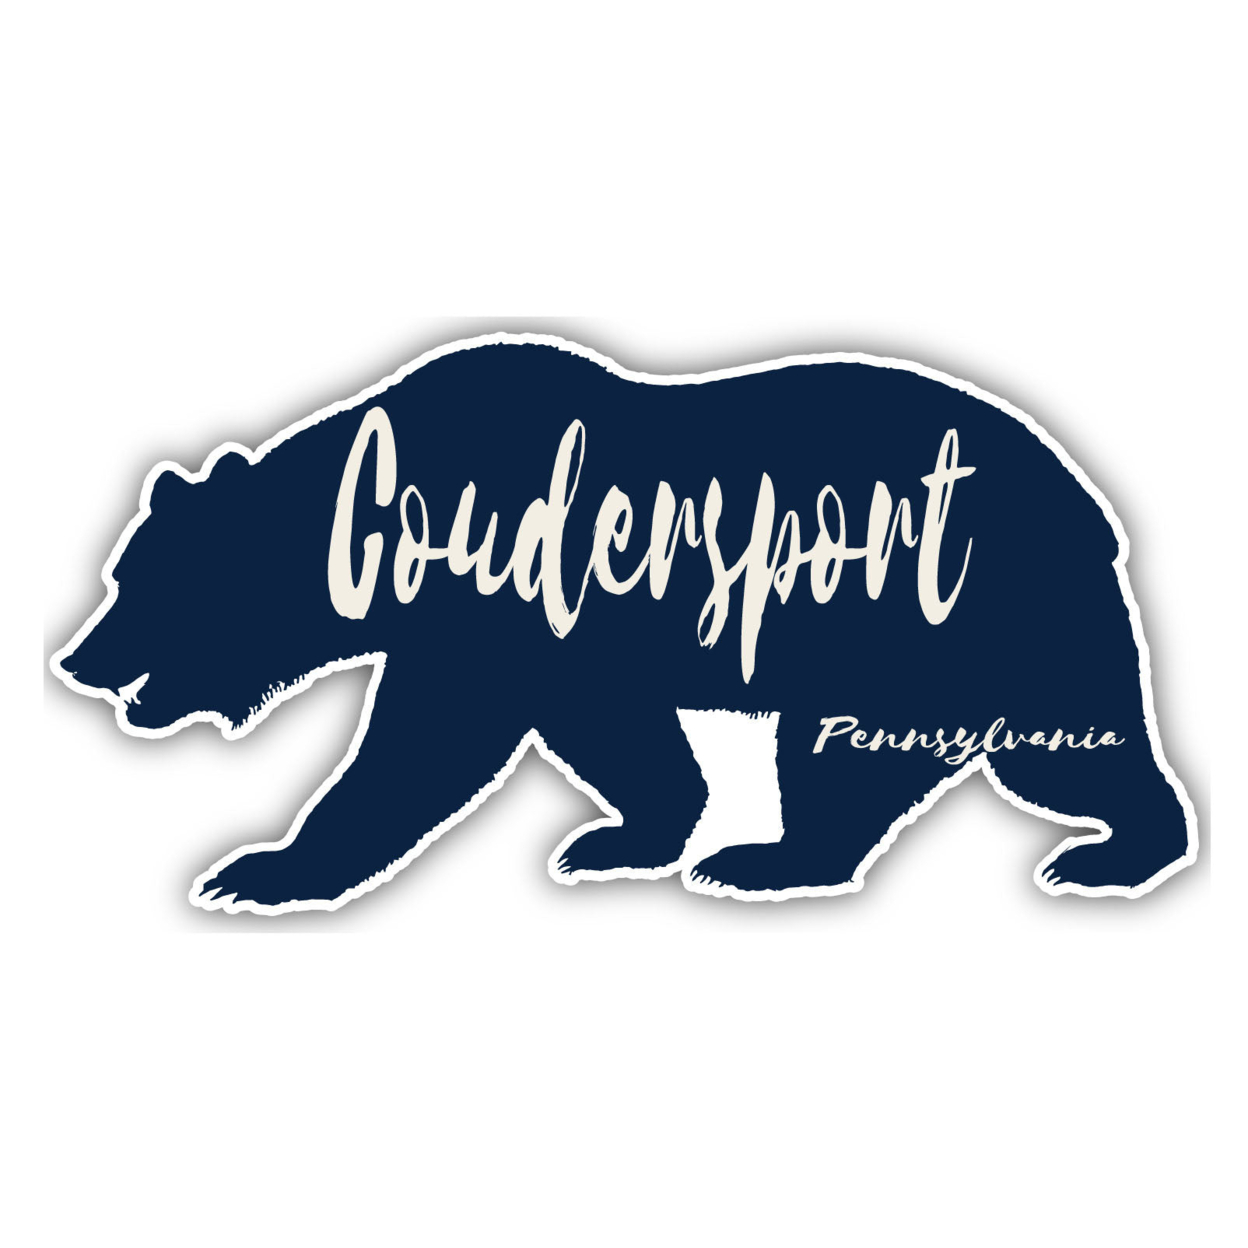 Coudersport Pennsylvania Souvenir Decorative Stickers (Choose Theme And Size) - Single Unit, 6-Inch, Bear